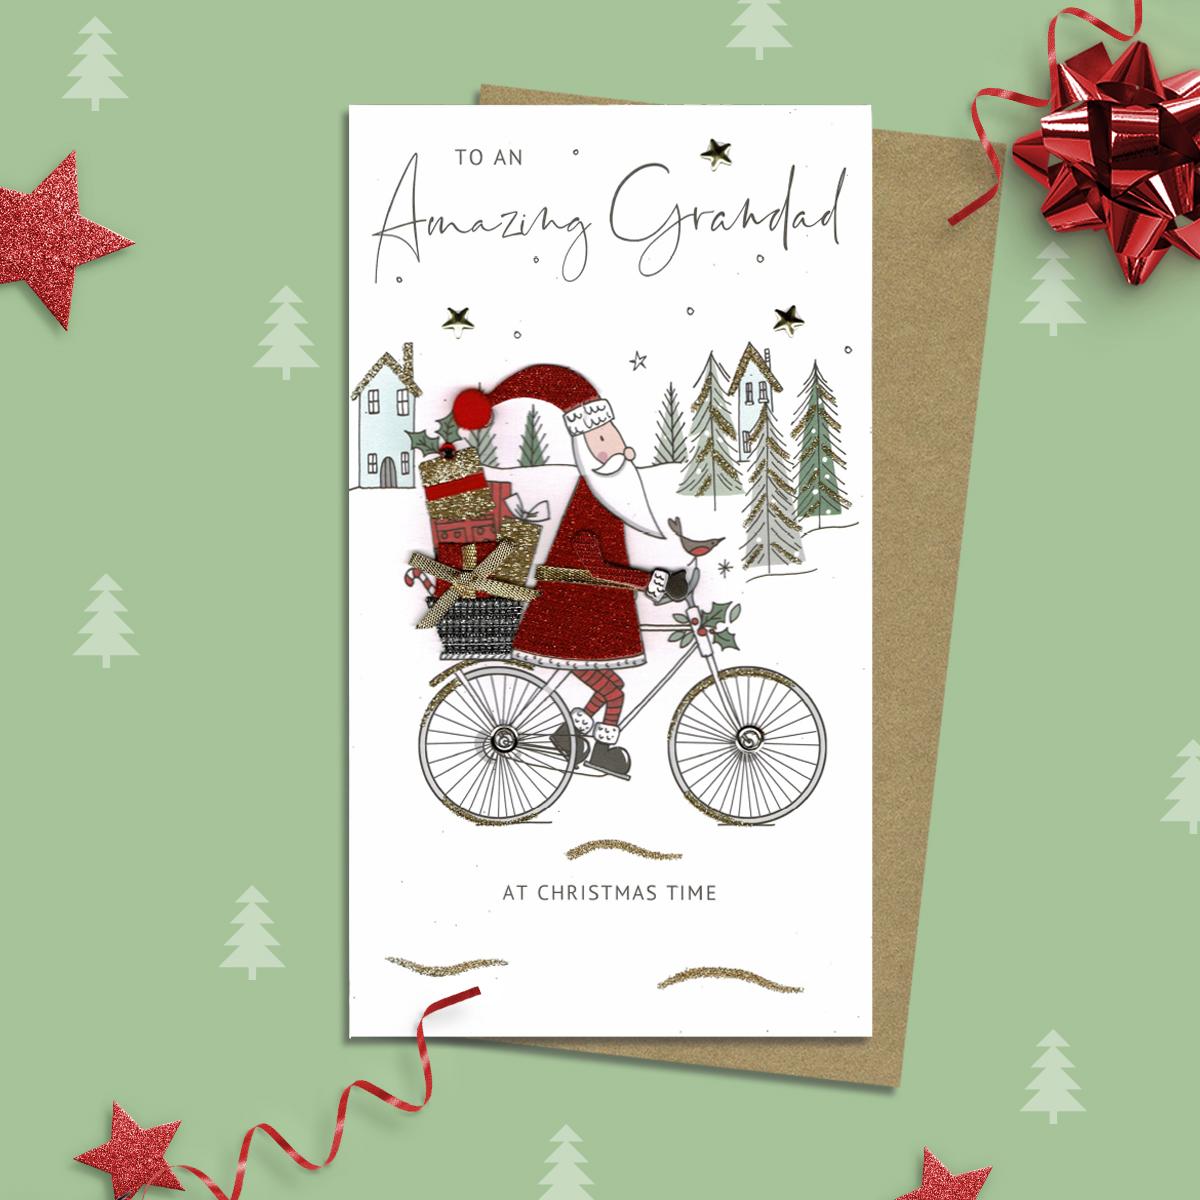 Grandad Christmas Card Alongside Its Gold Envelope